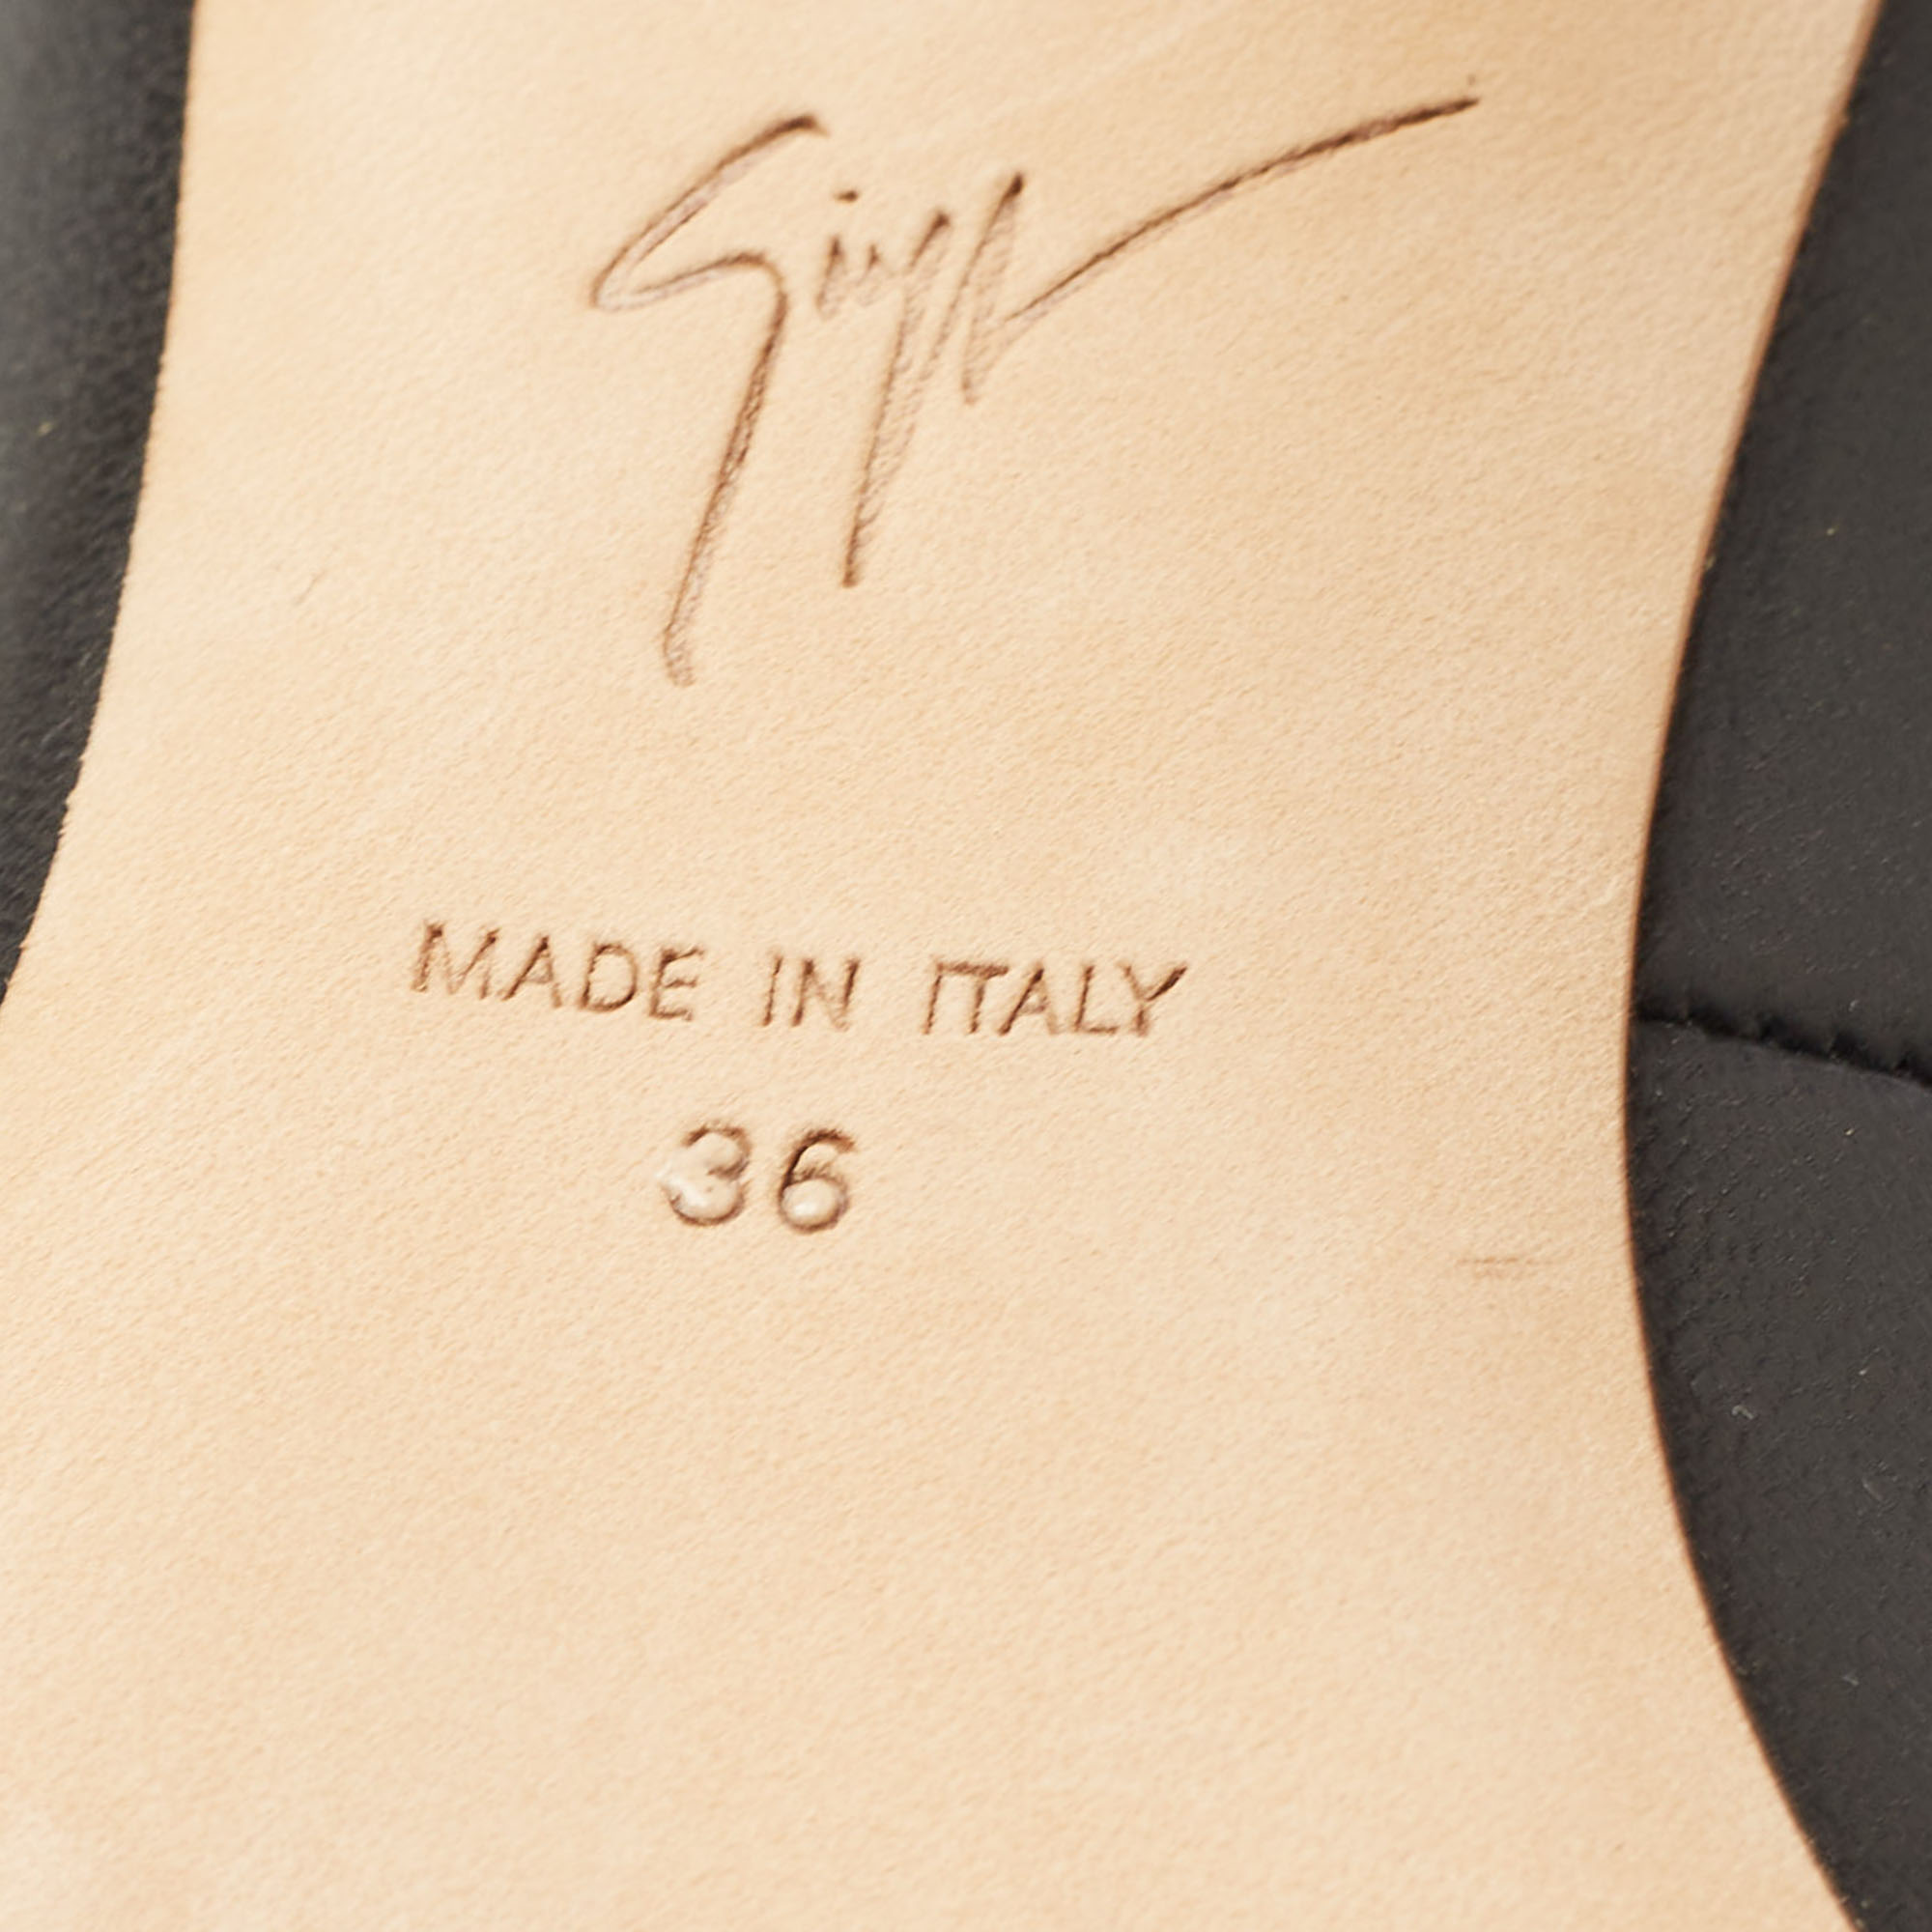 Giuseppe Zanotti Black Leather Pointed Toe Pumps Size 36